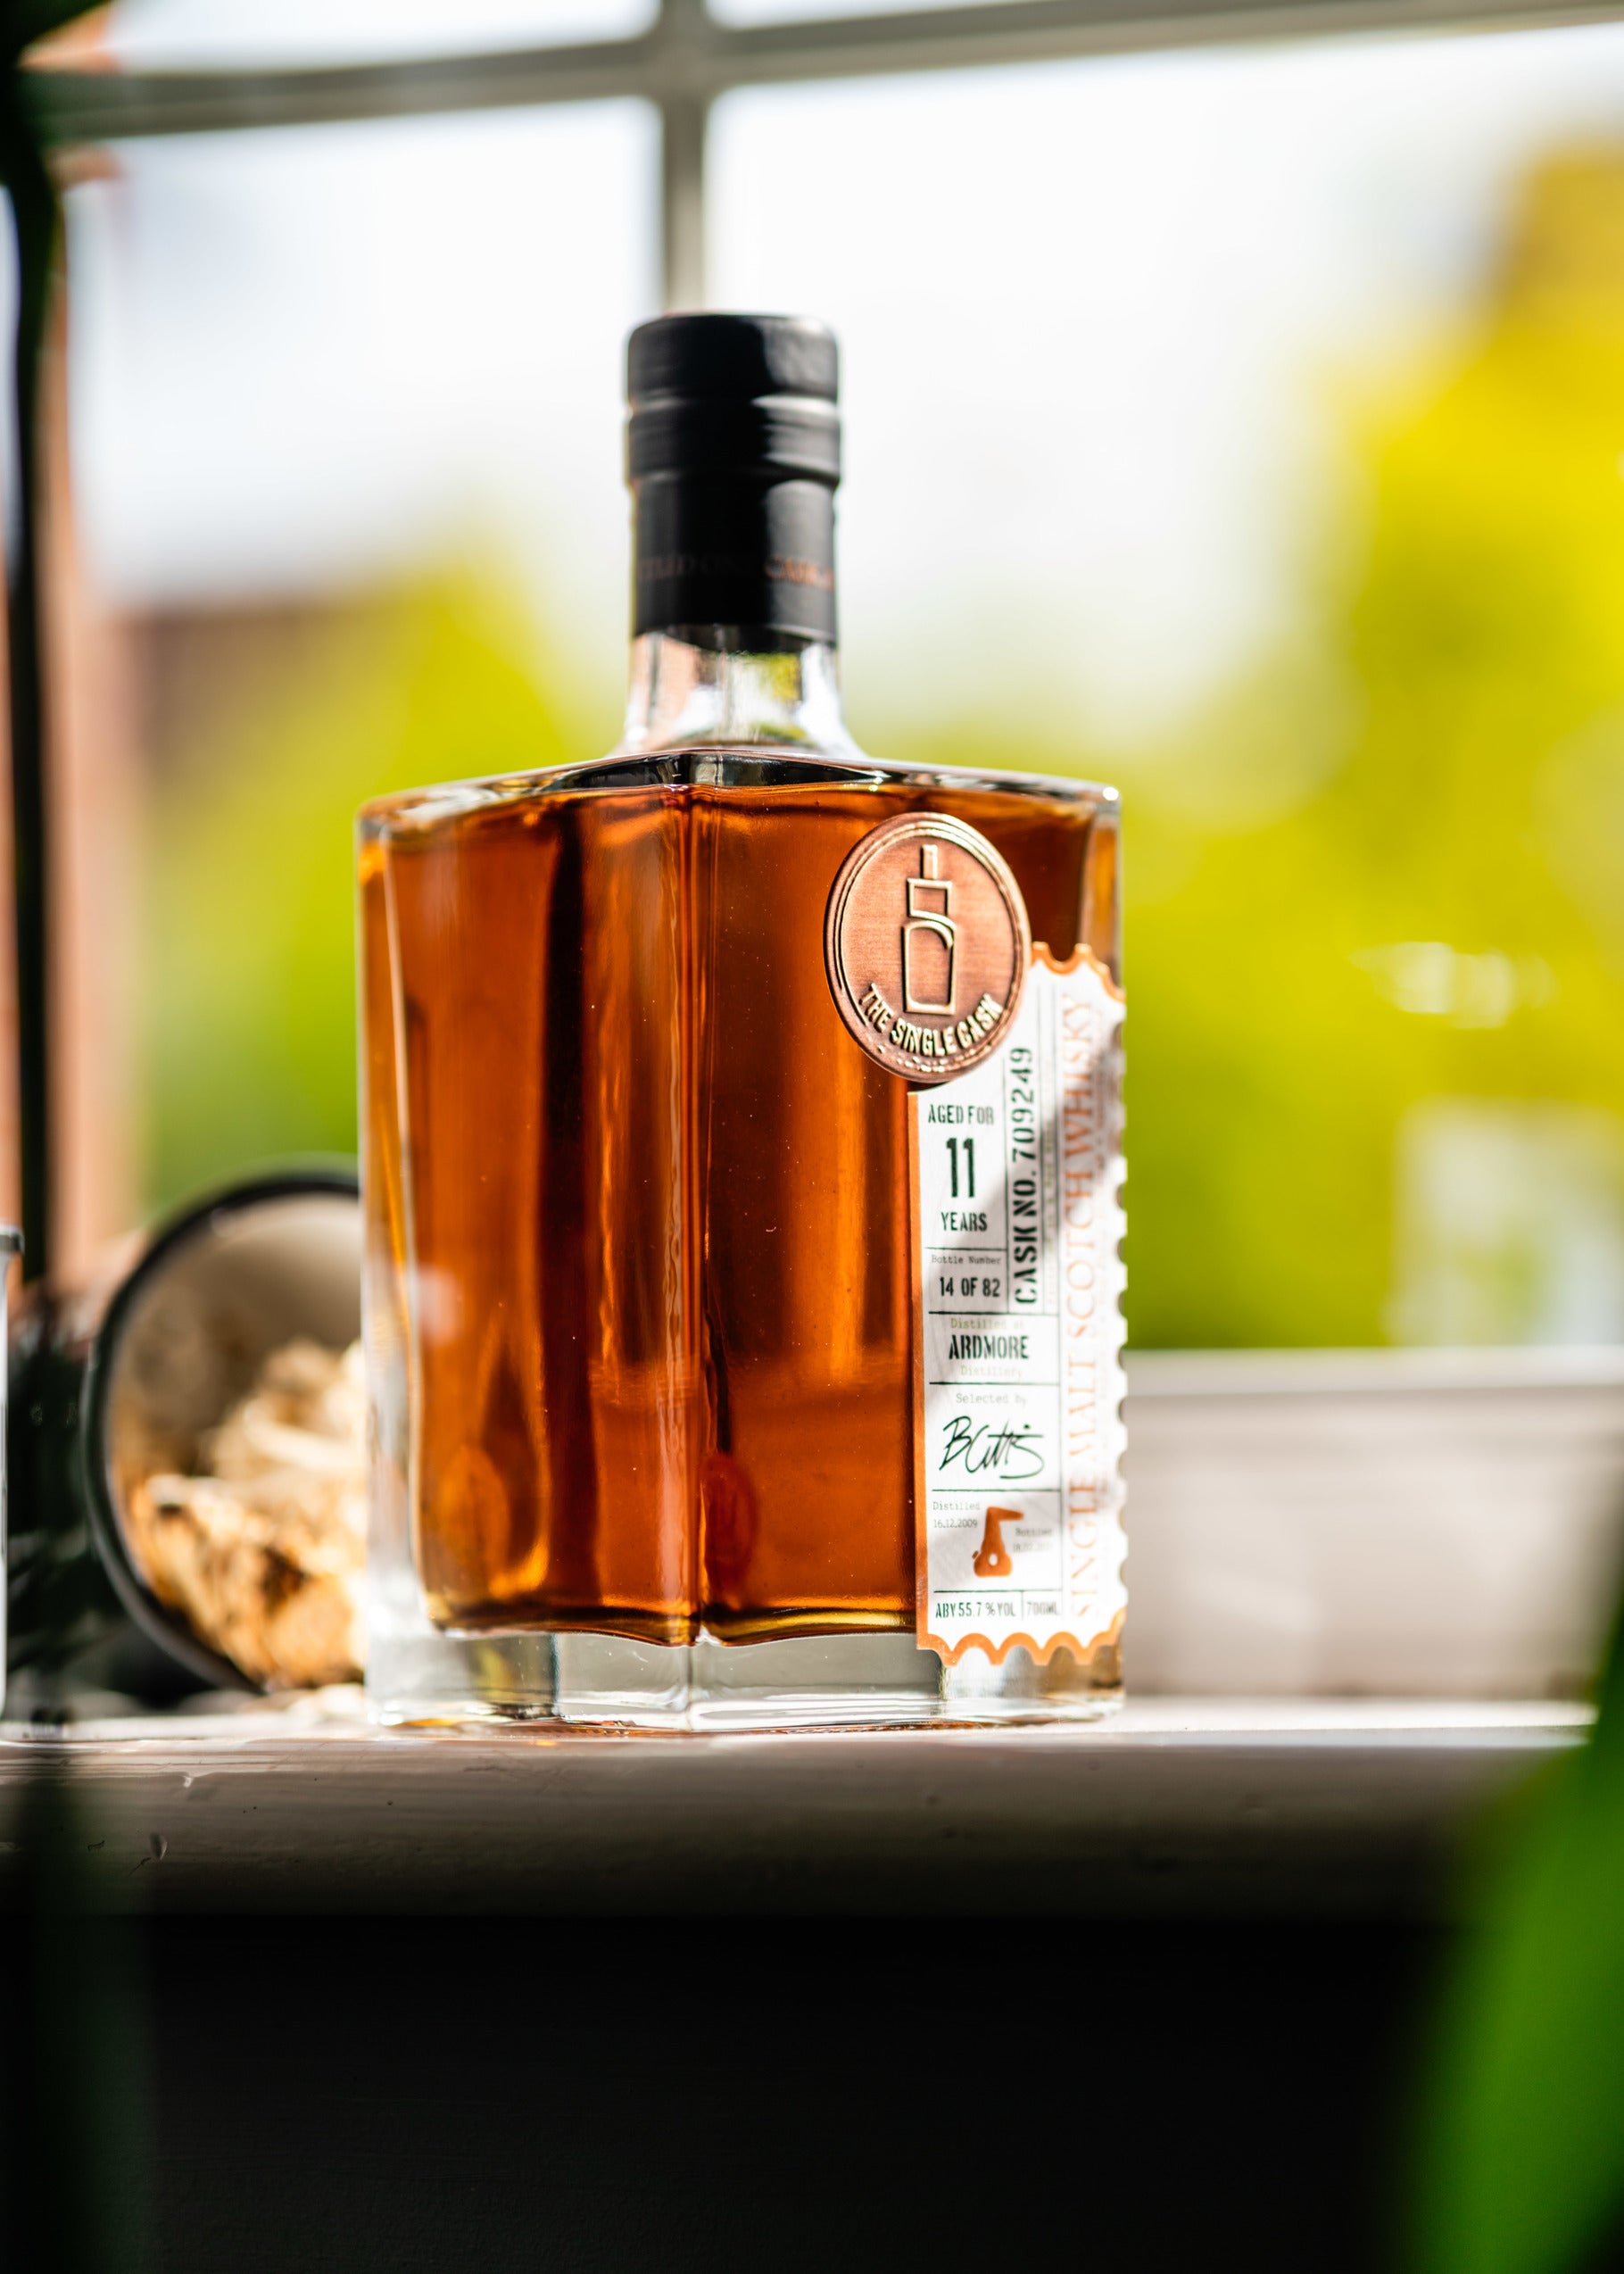 Ardmore scotch whisky bottled by The Single Cask